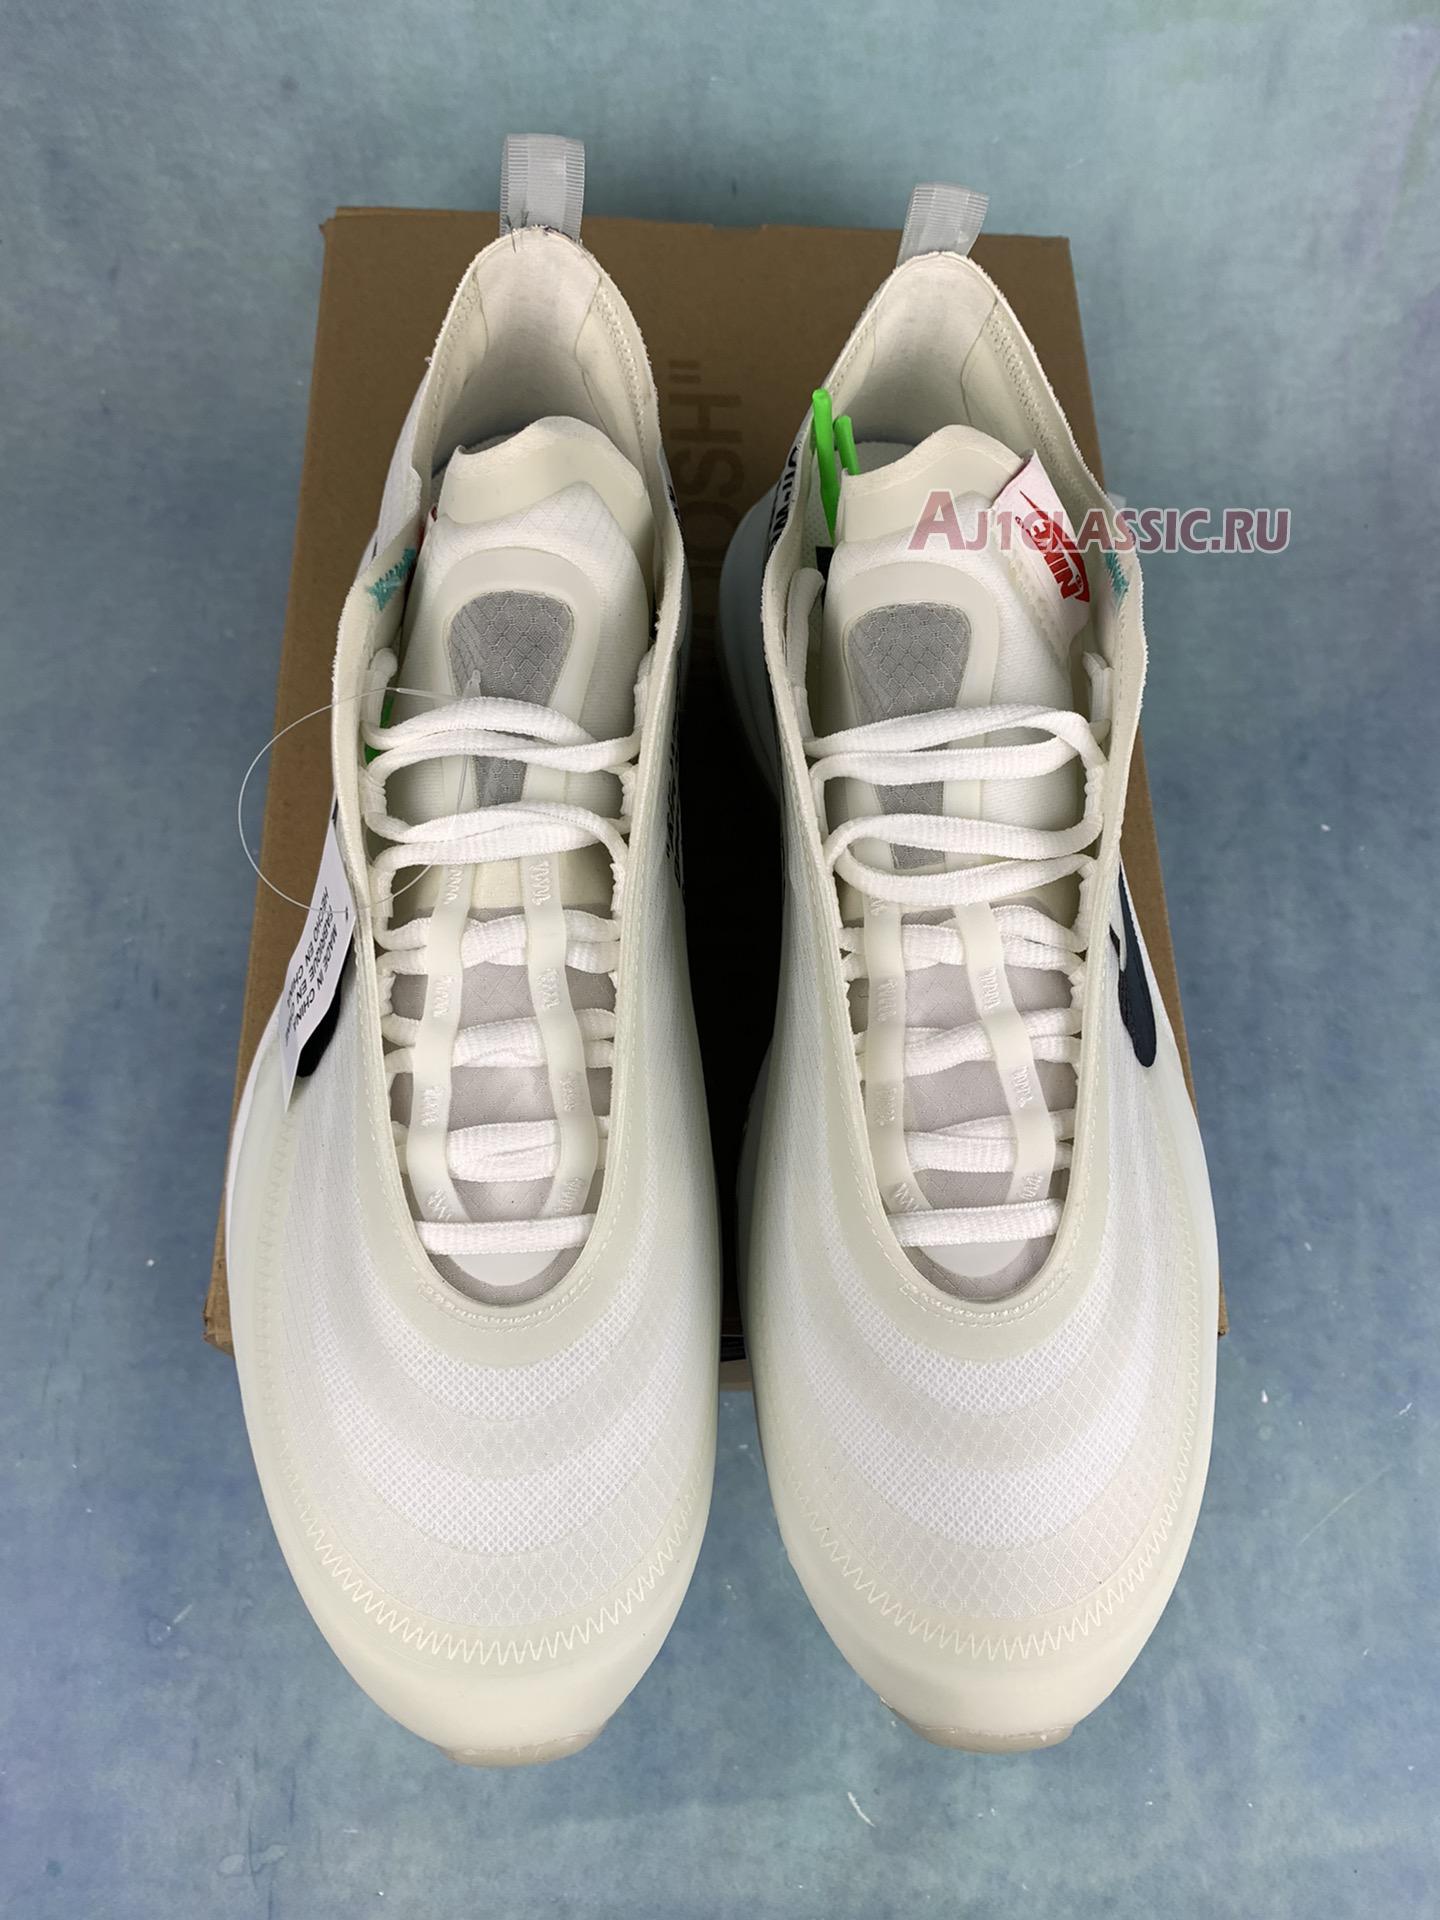 Off-White x Nike Air Max 97 OG "The Ten" AJ4585-100